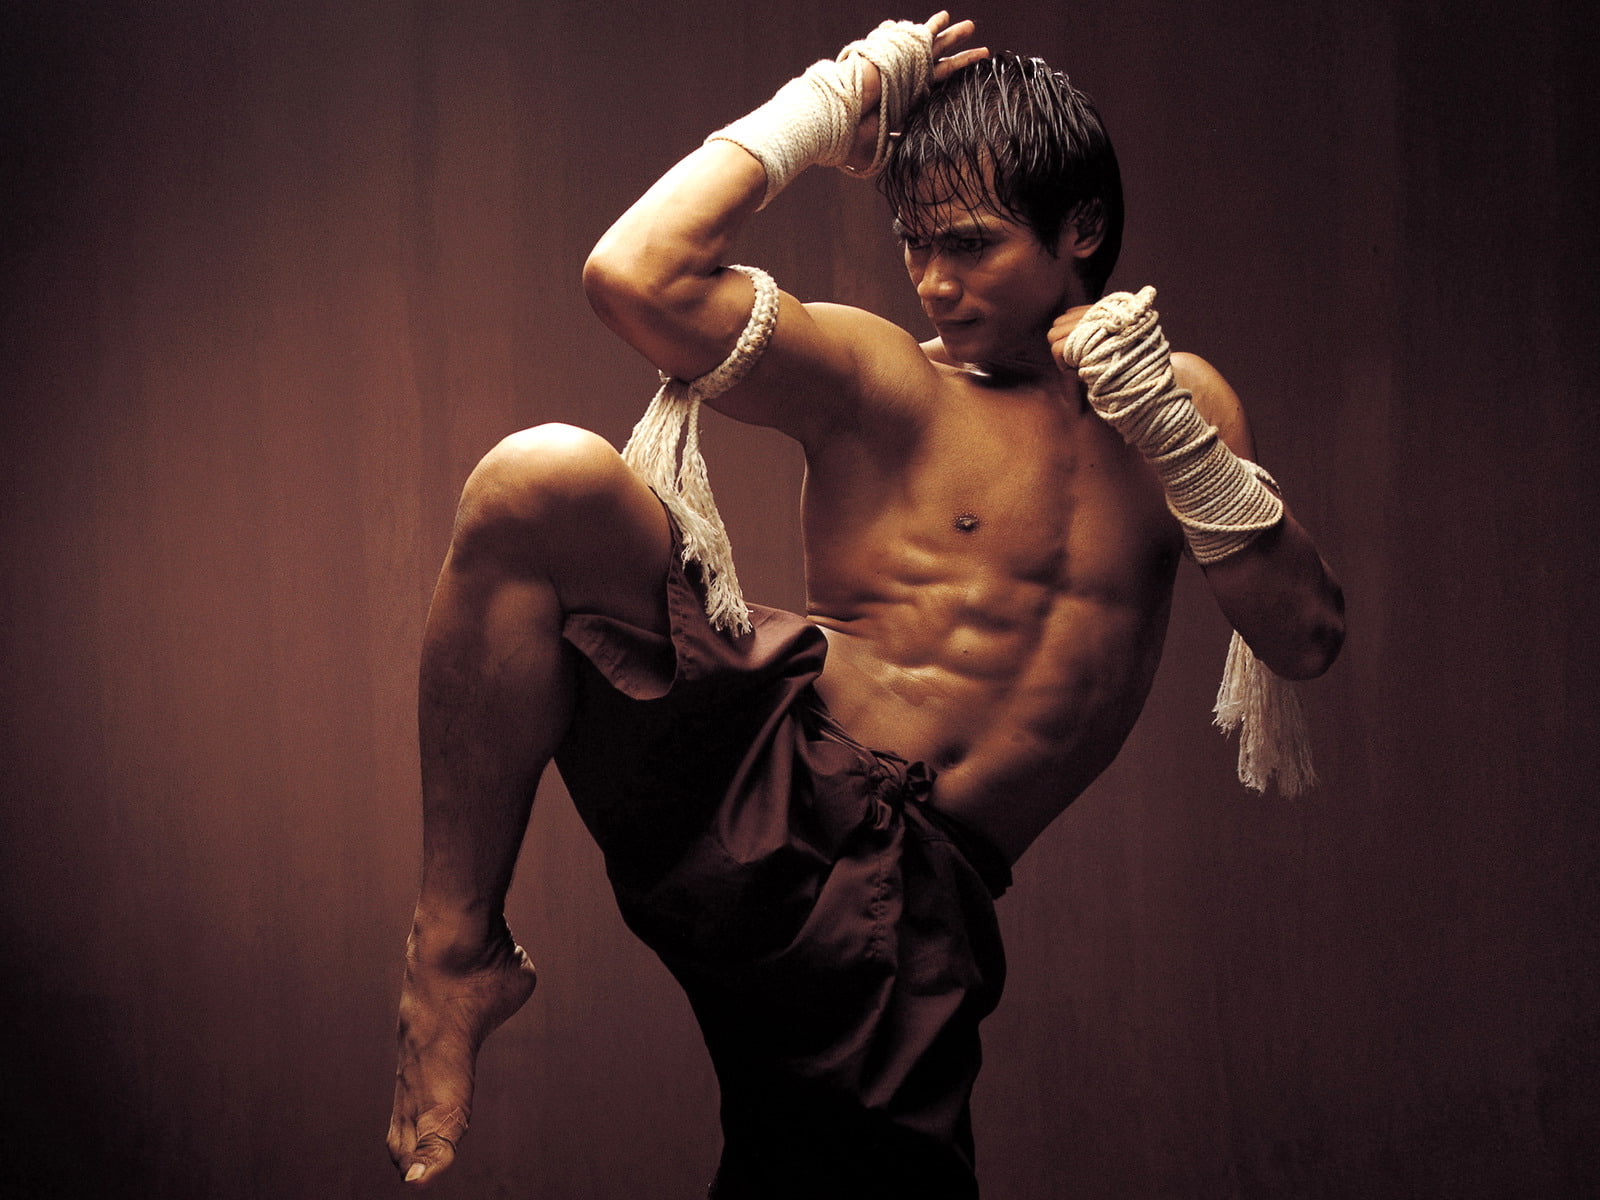 Tony Jaa as Tien of Ong Bak, wall, Thai Boxing, muscular Build